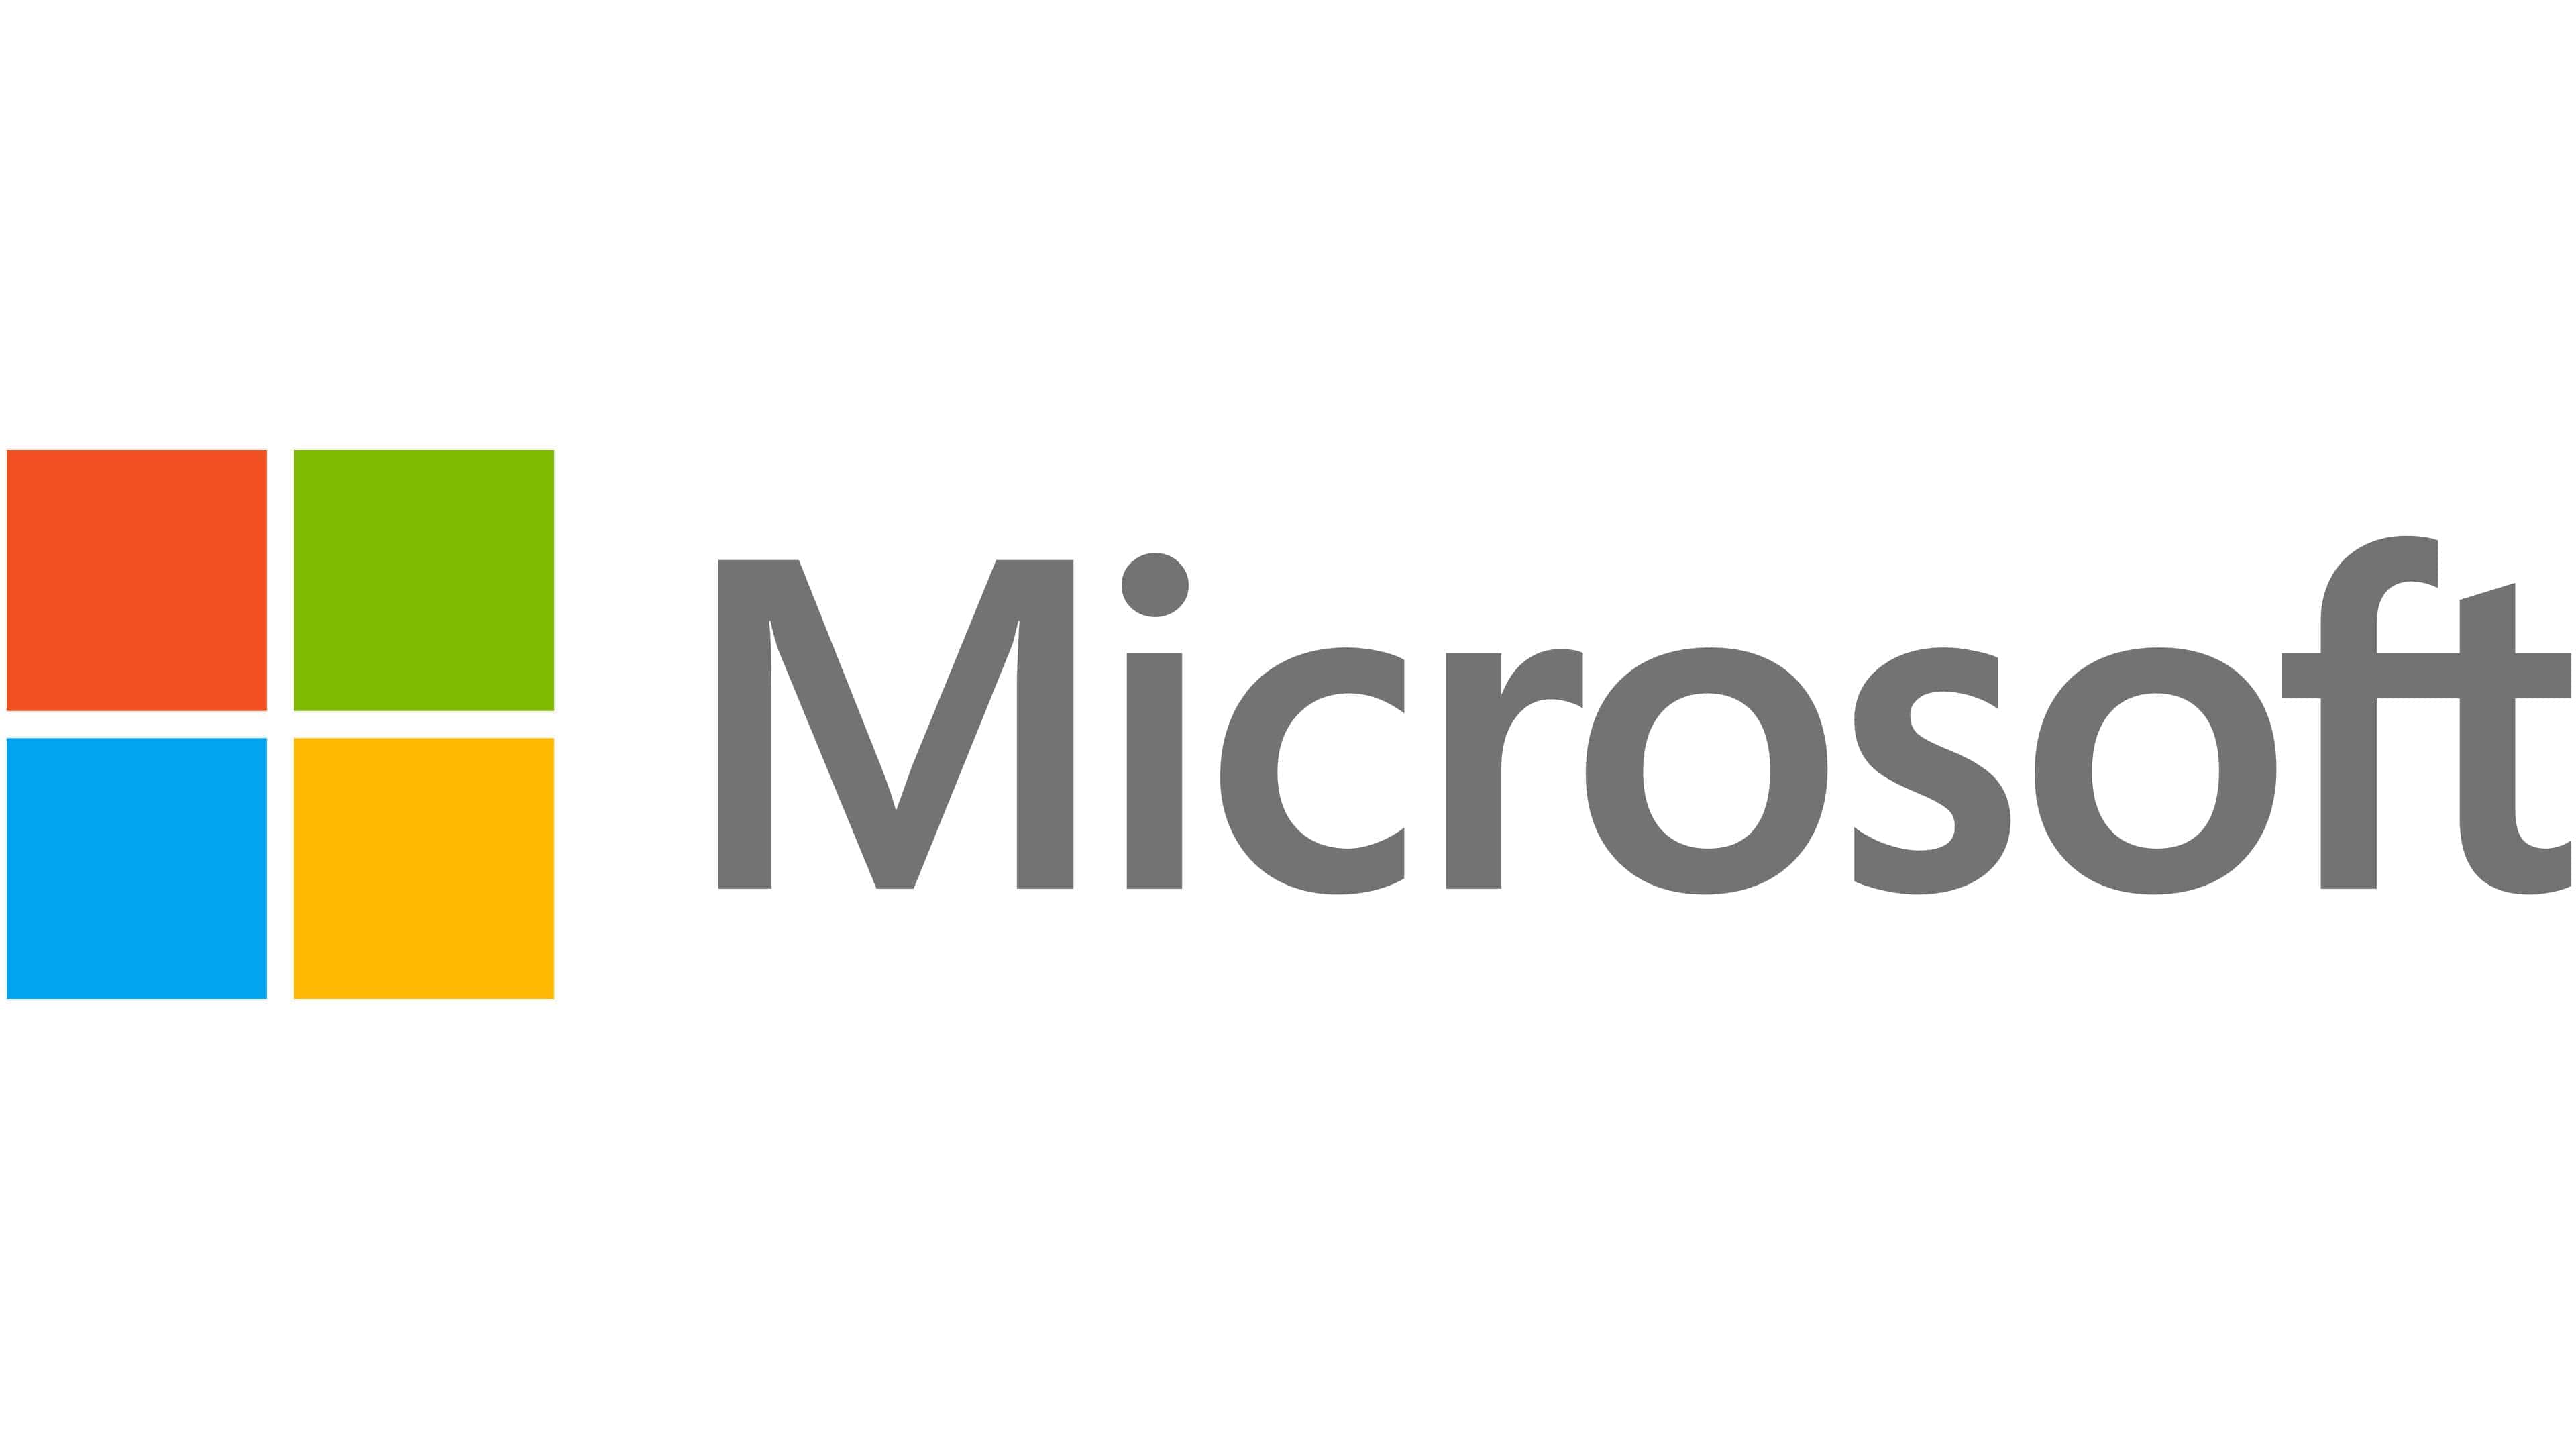 Microsoft Coupons & Promo Codes